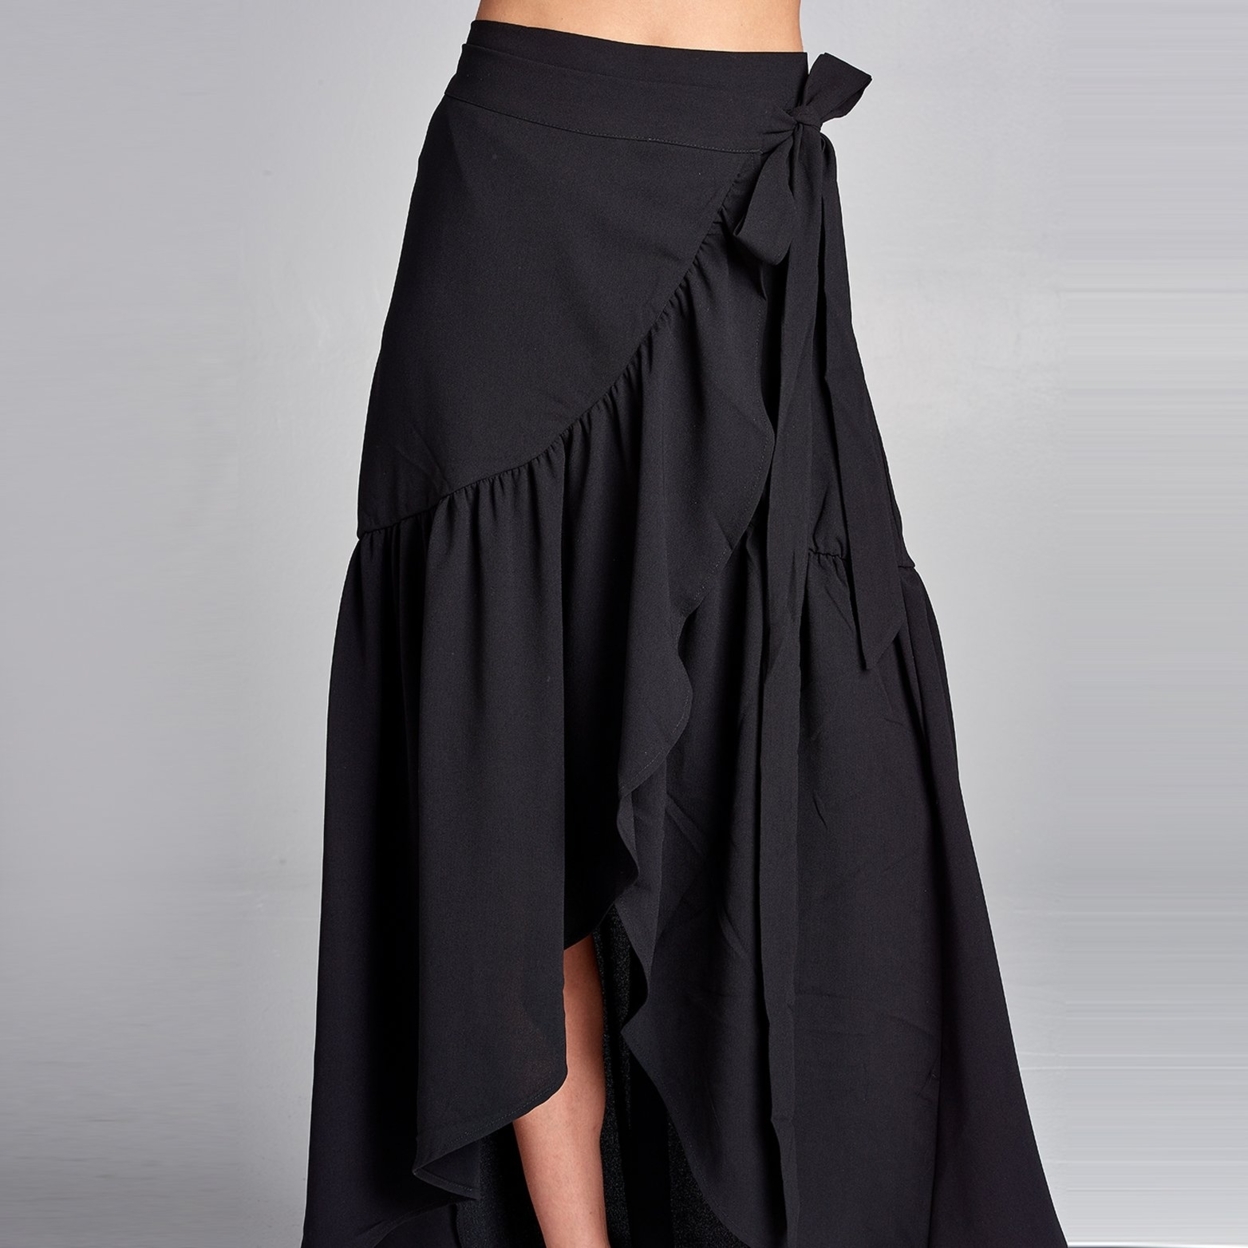 Frilled Wrap Skirt - Black, Large (12-14)